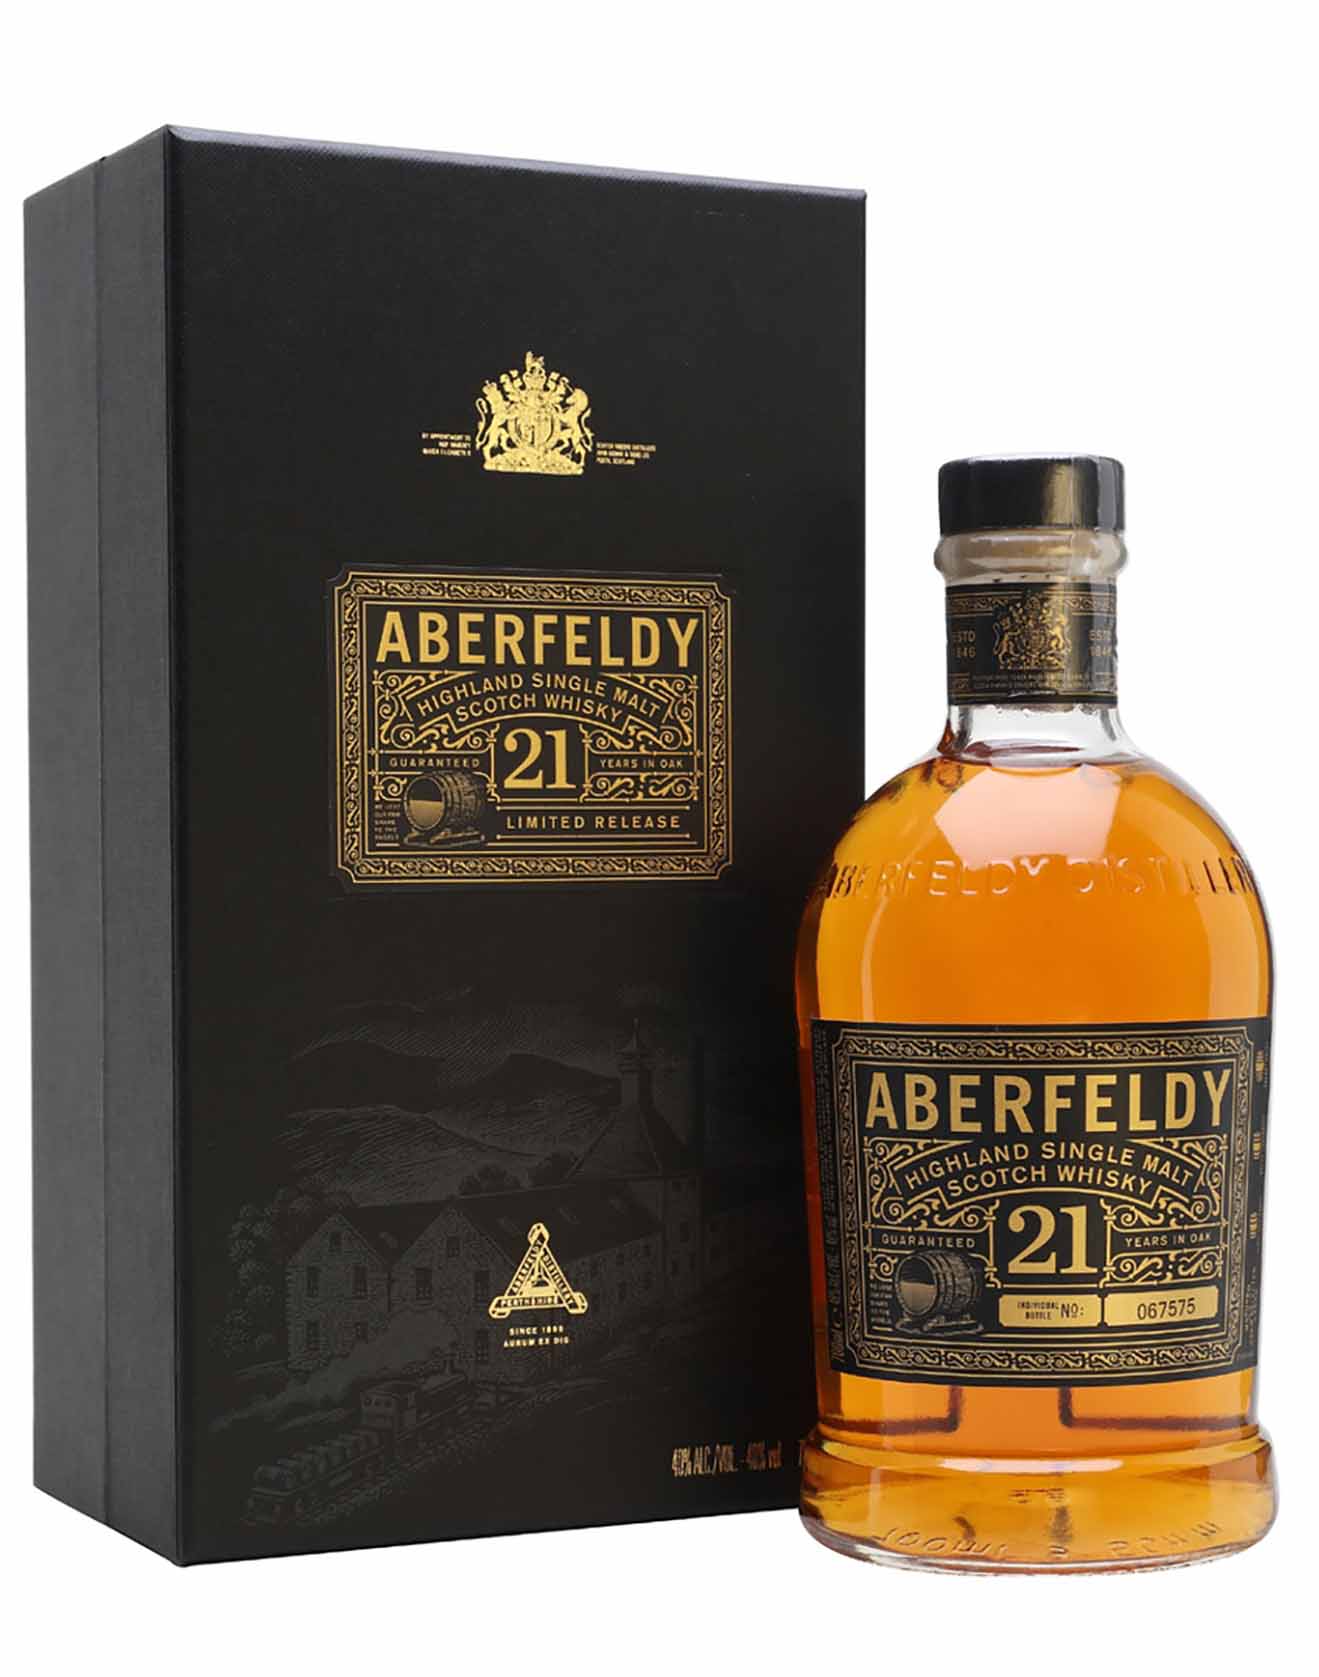 Aberfeldy 21 year old Single Malt Whisky, 70cl